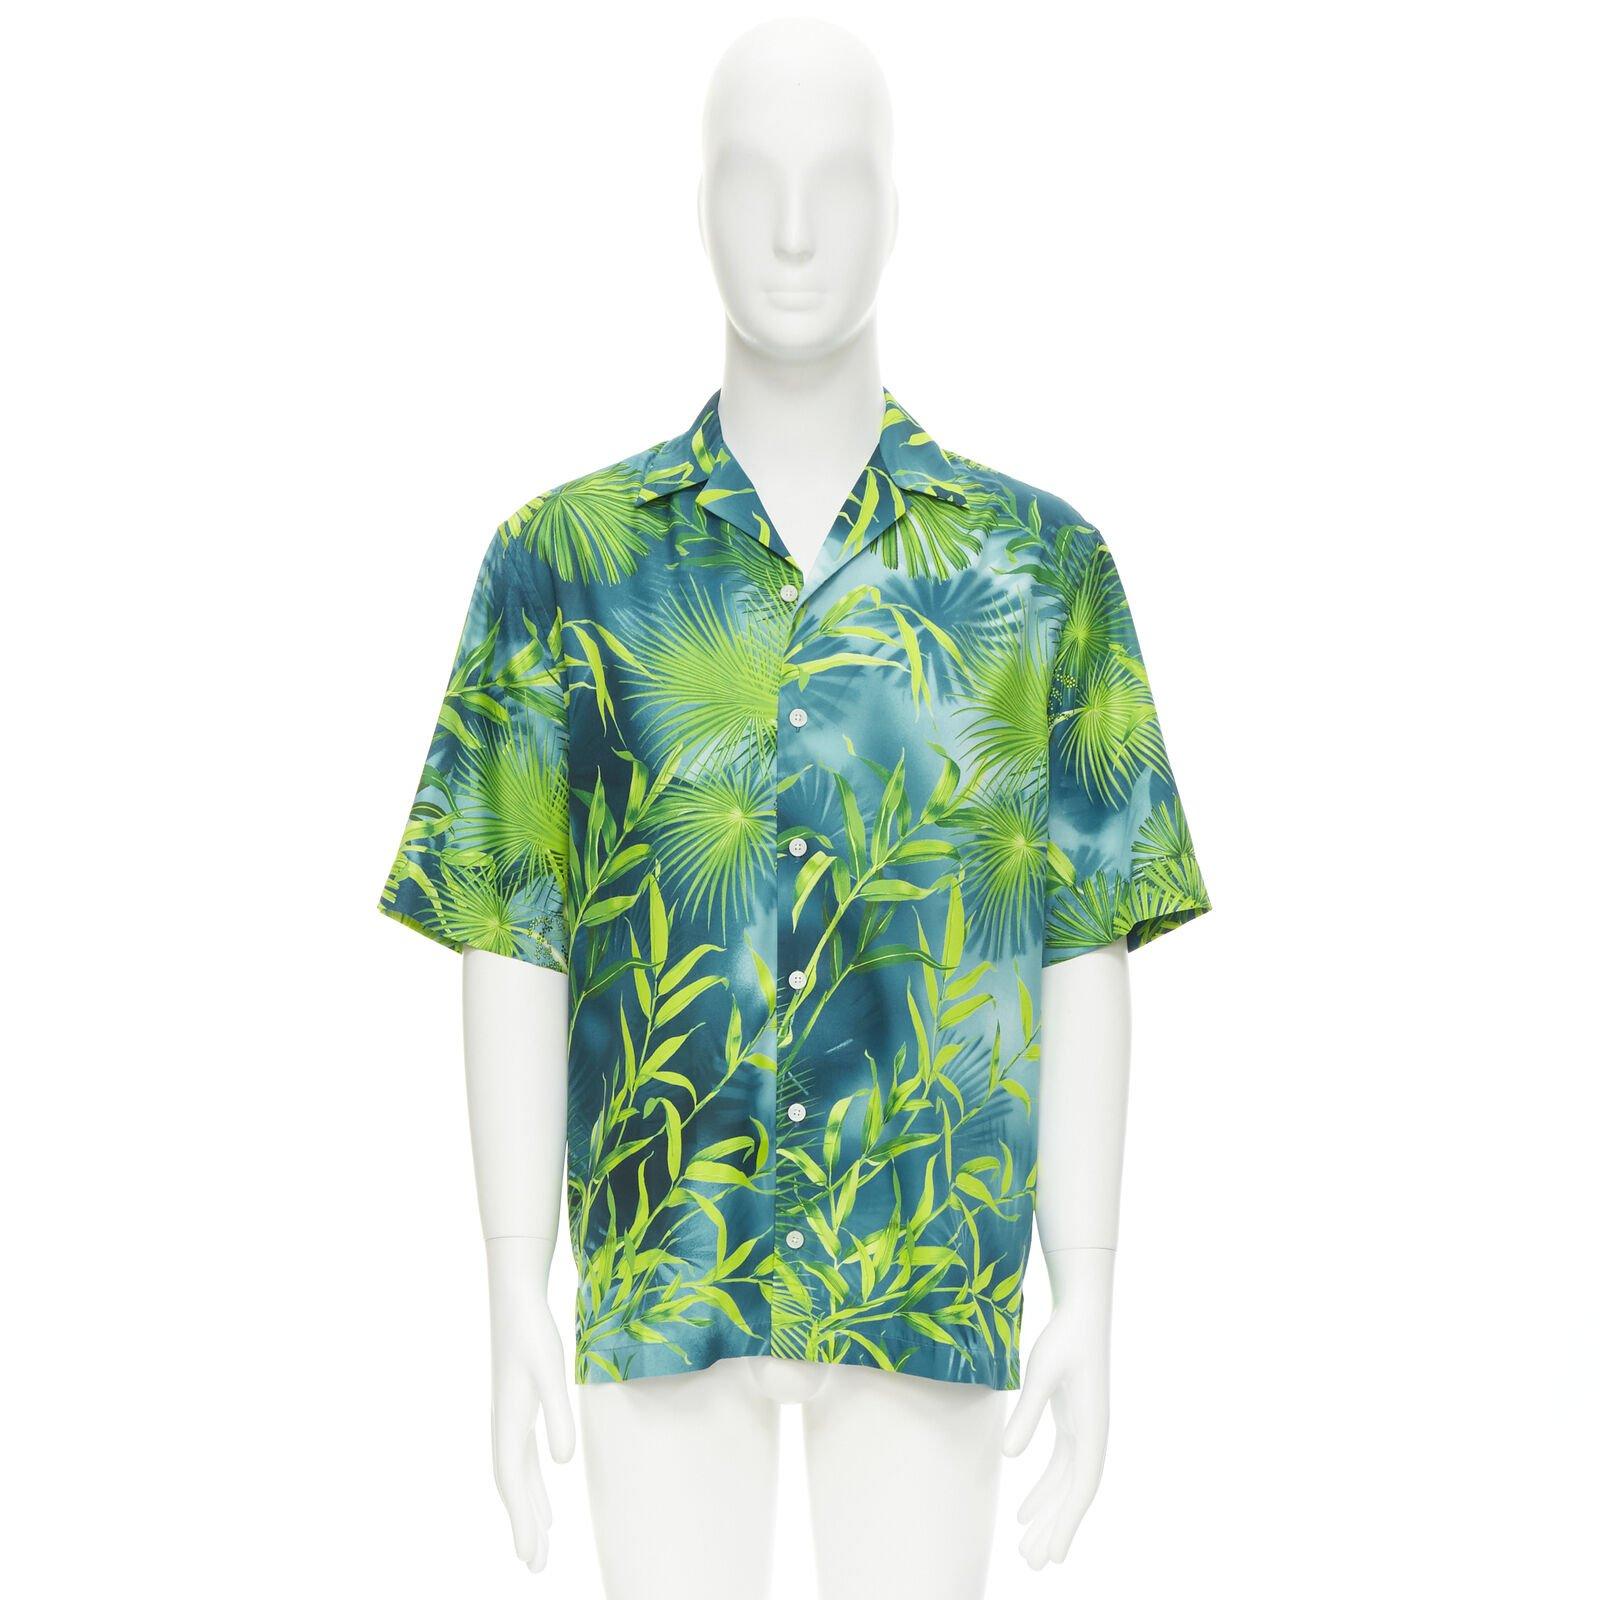 VERSACE 2020 Iconic JLo Jungle print green tropical print shirt EU38 S For Sale 7